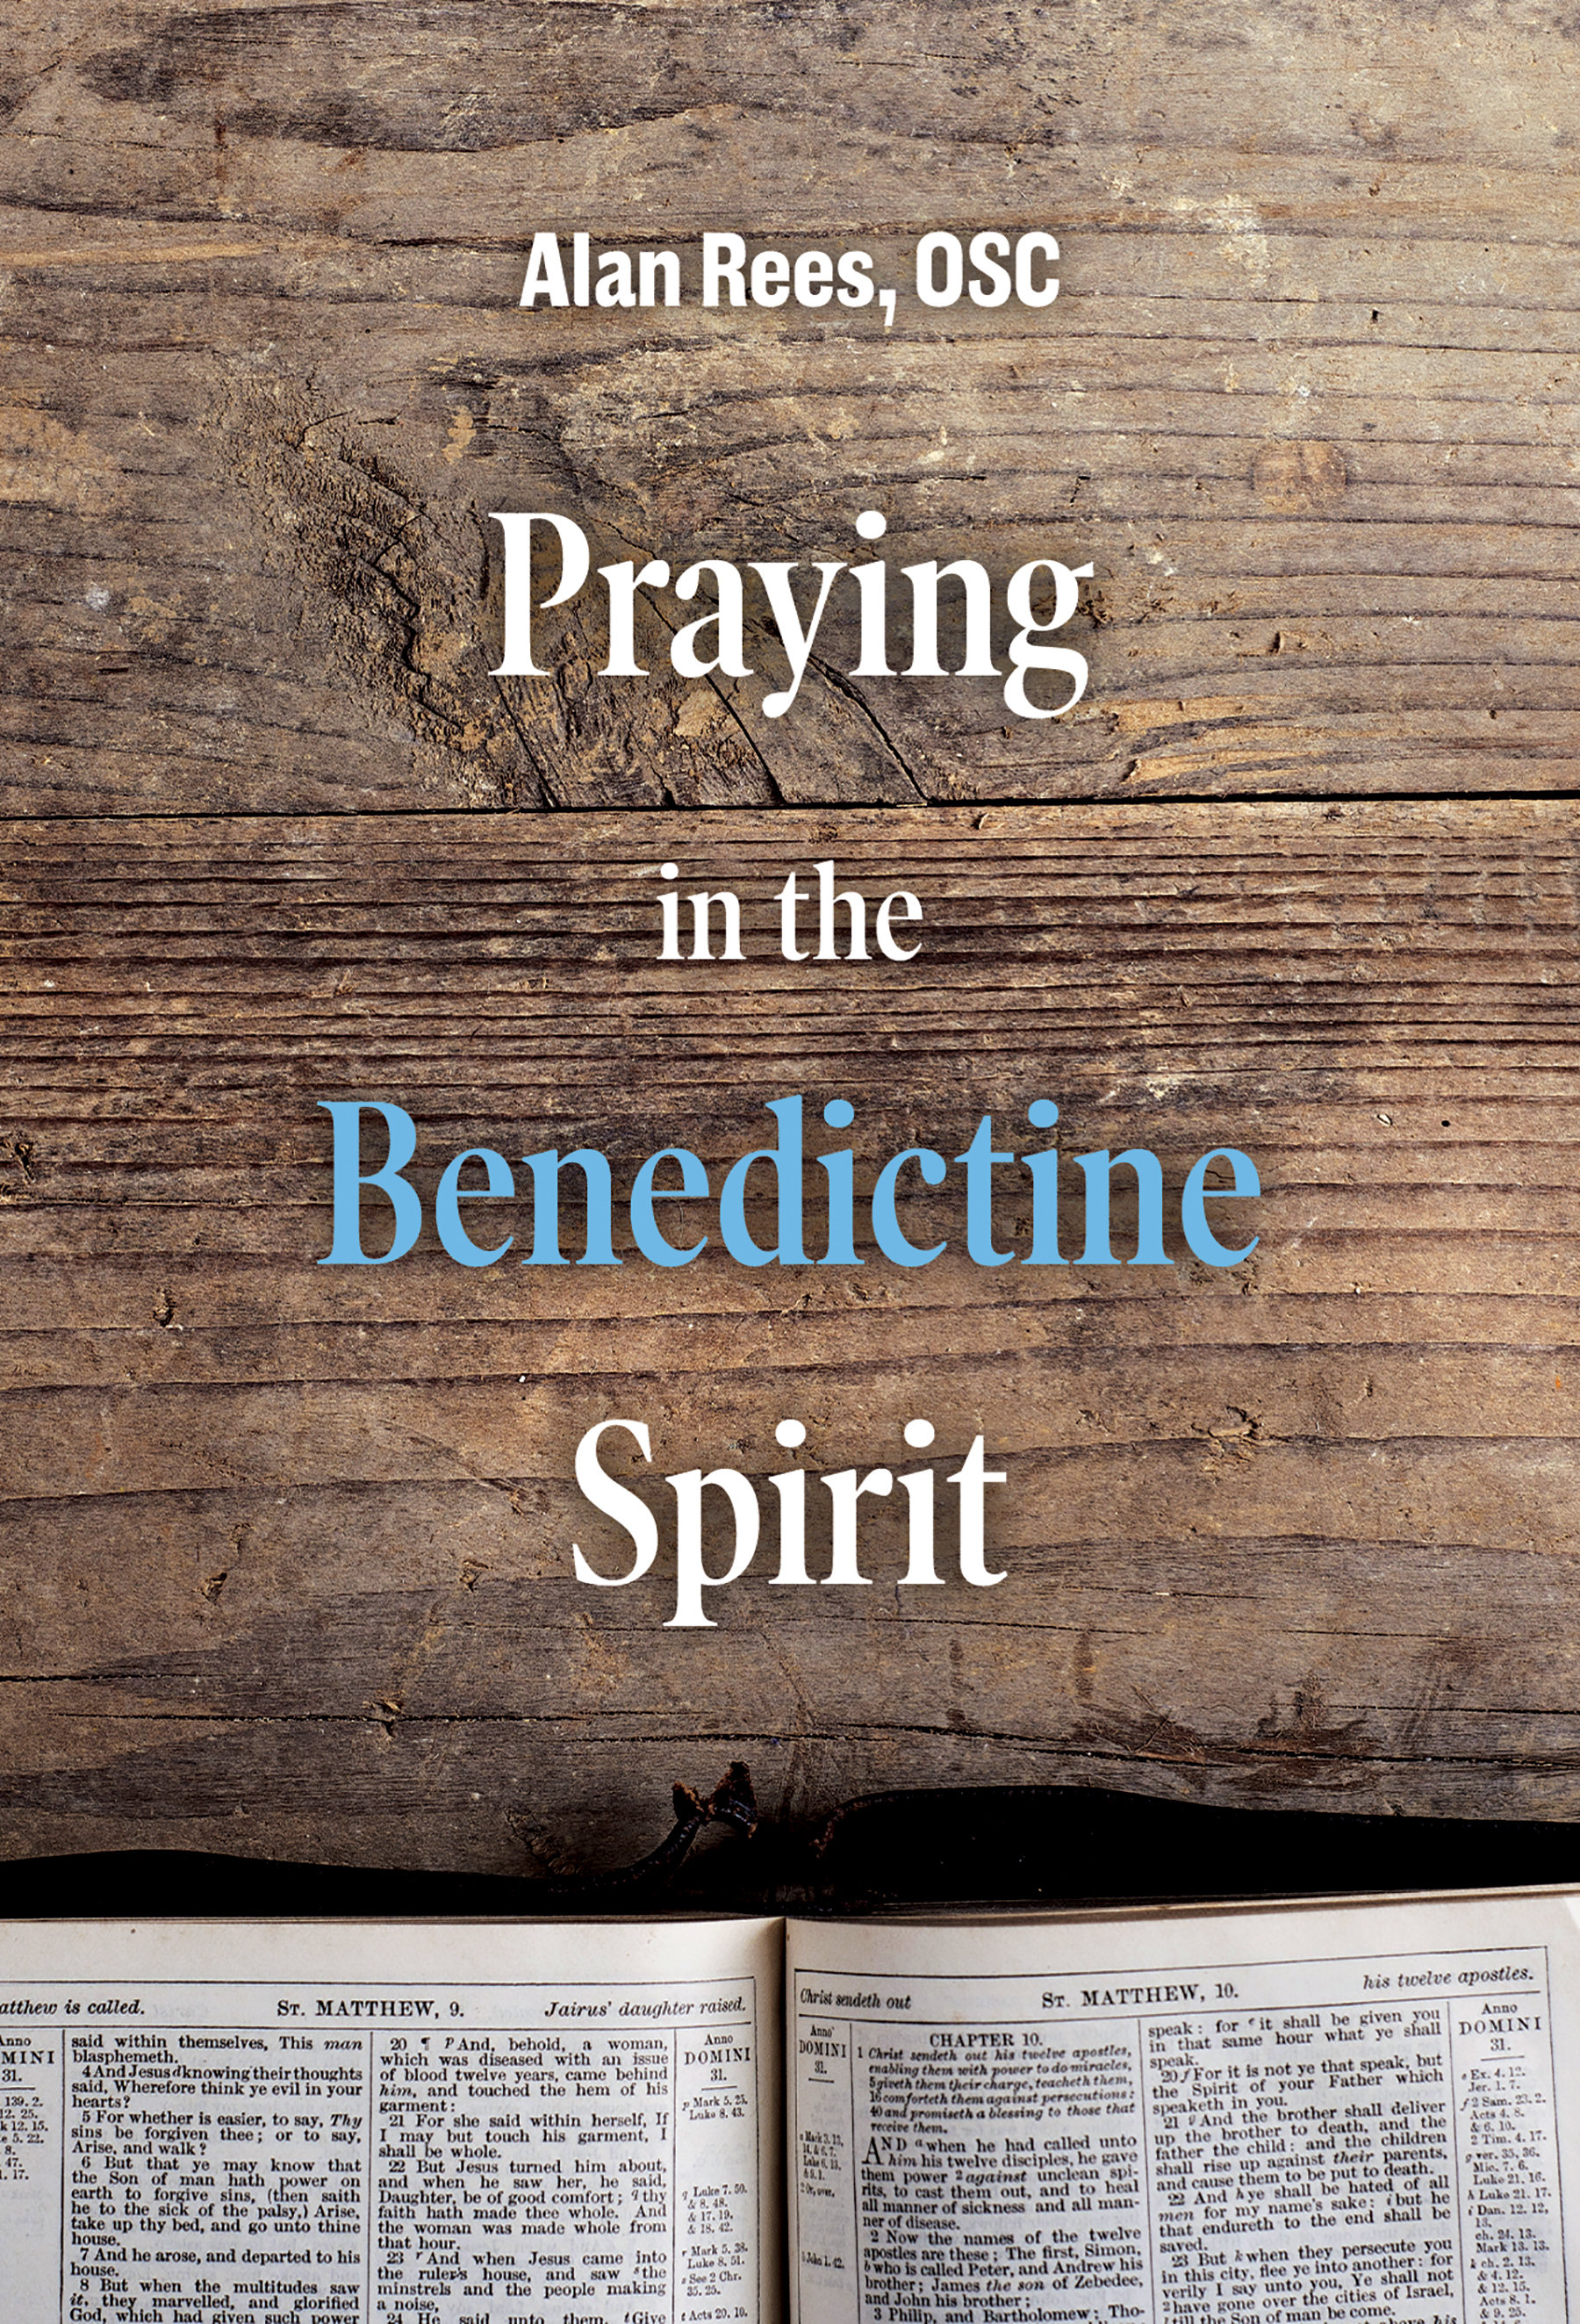 Praying in the Benedictine Spirit